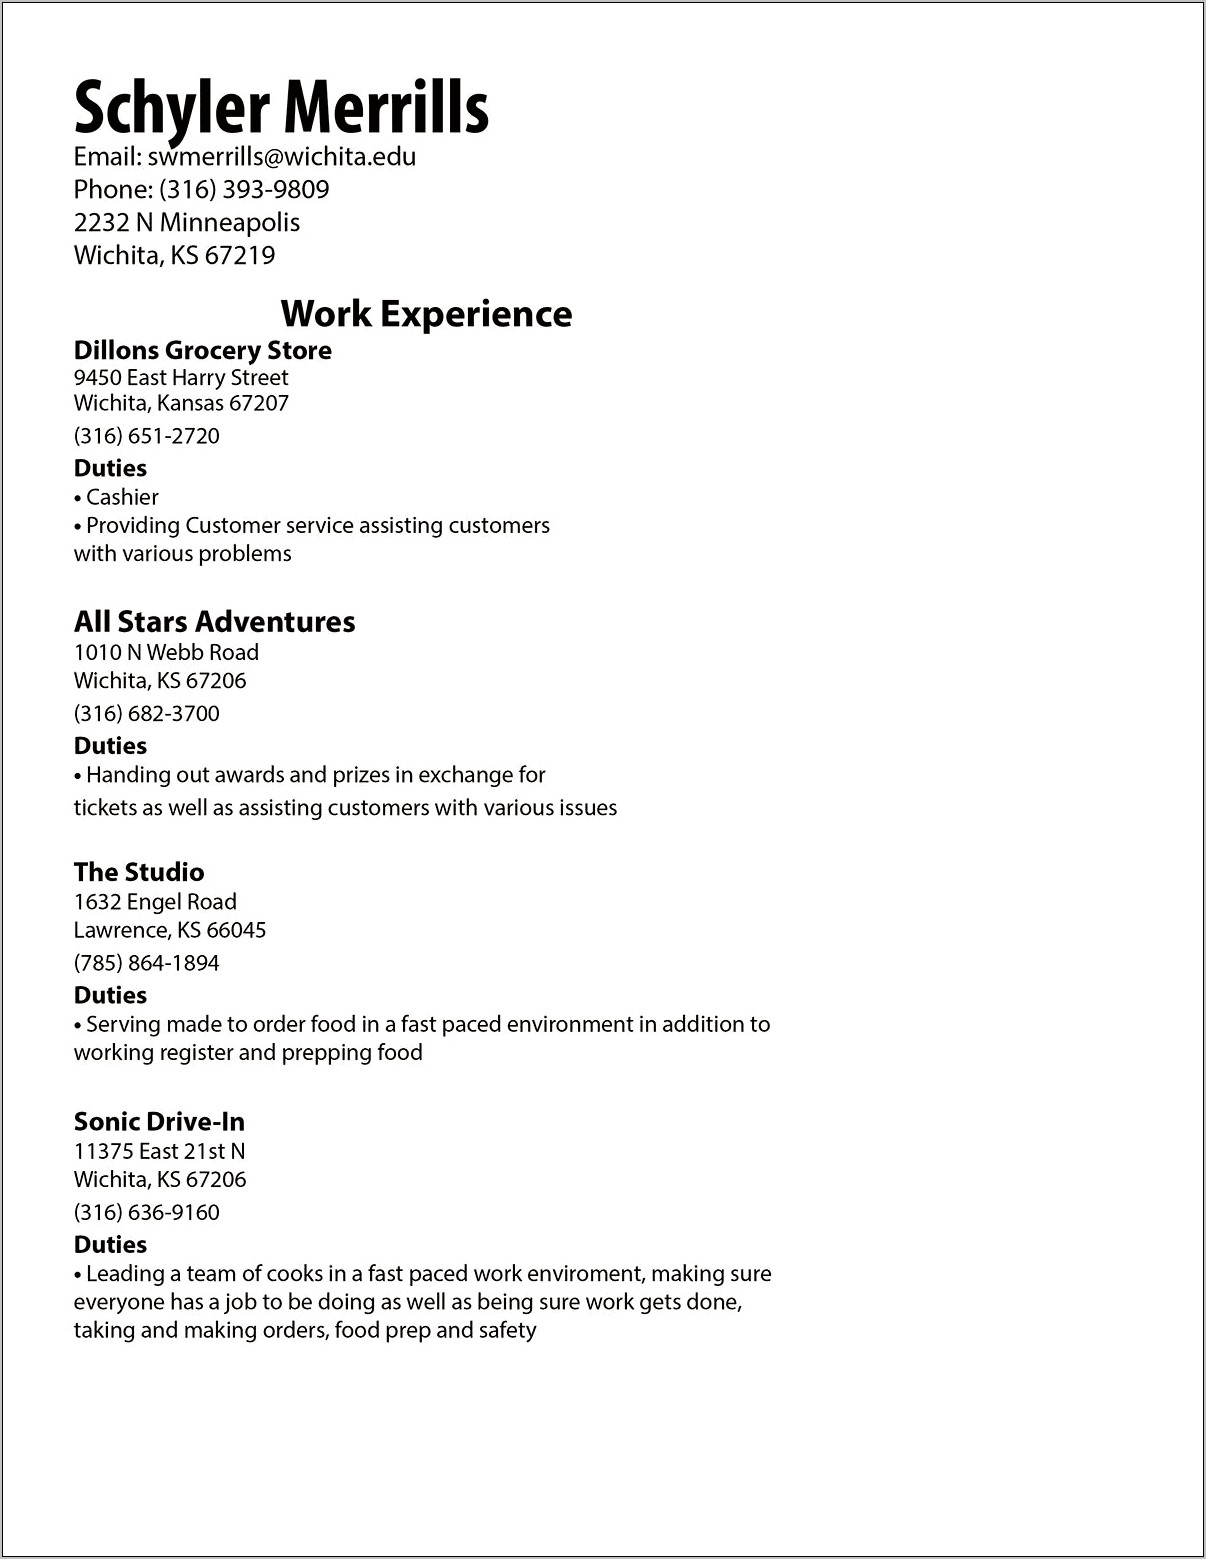 Sonic Drive Thru Job Description For Resume